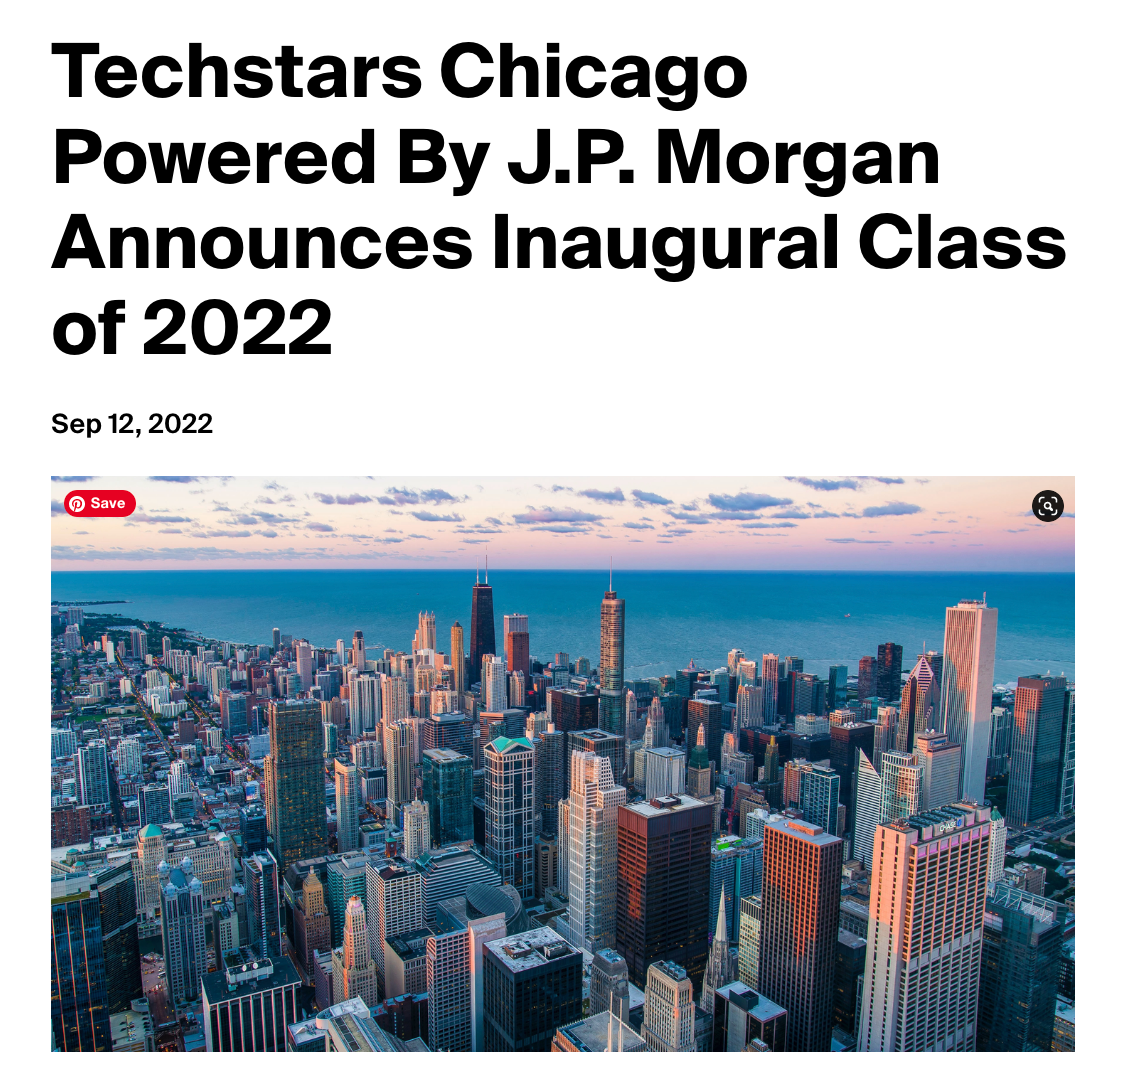 Techstars Chicago Powered by J.P. Morgan Announces Inaugural Class 2022